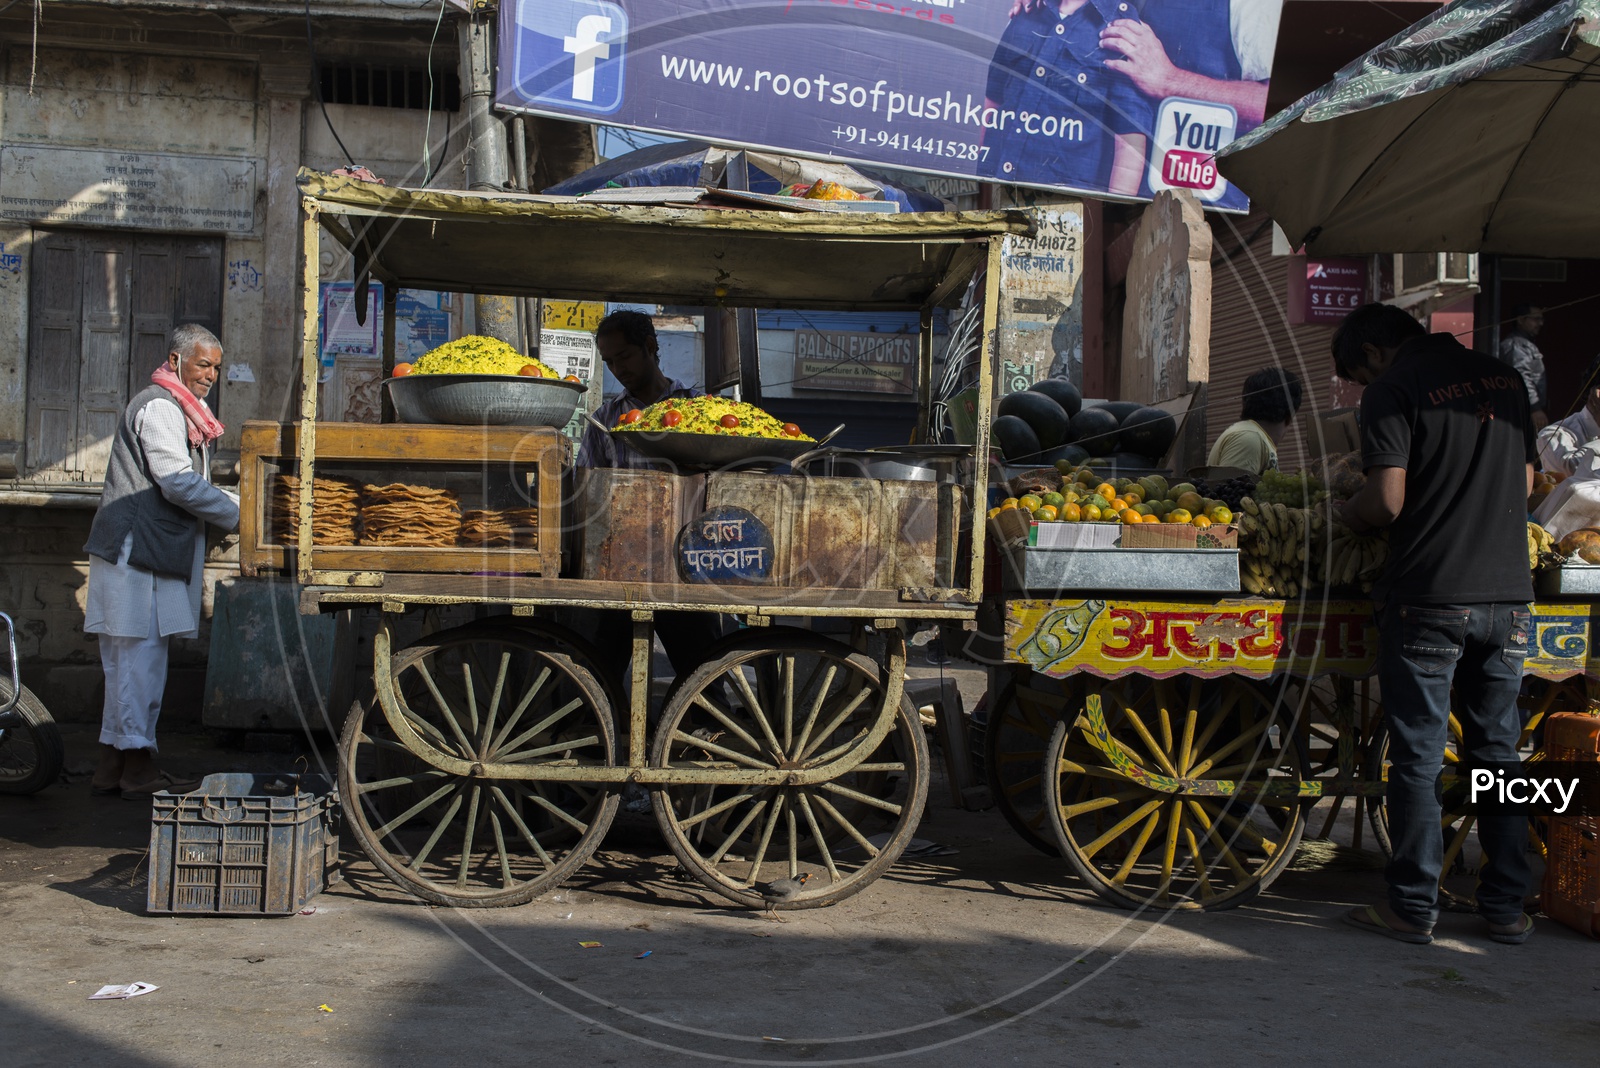 Street food in Pushkar